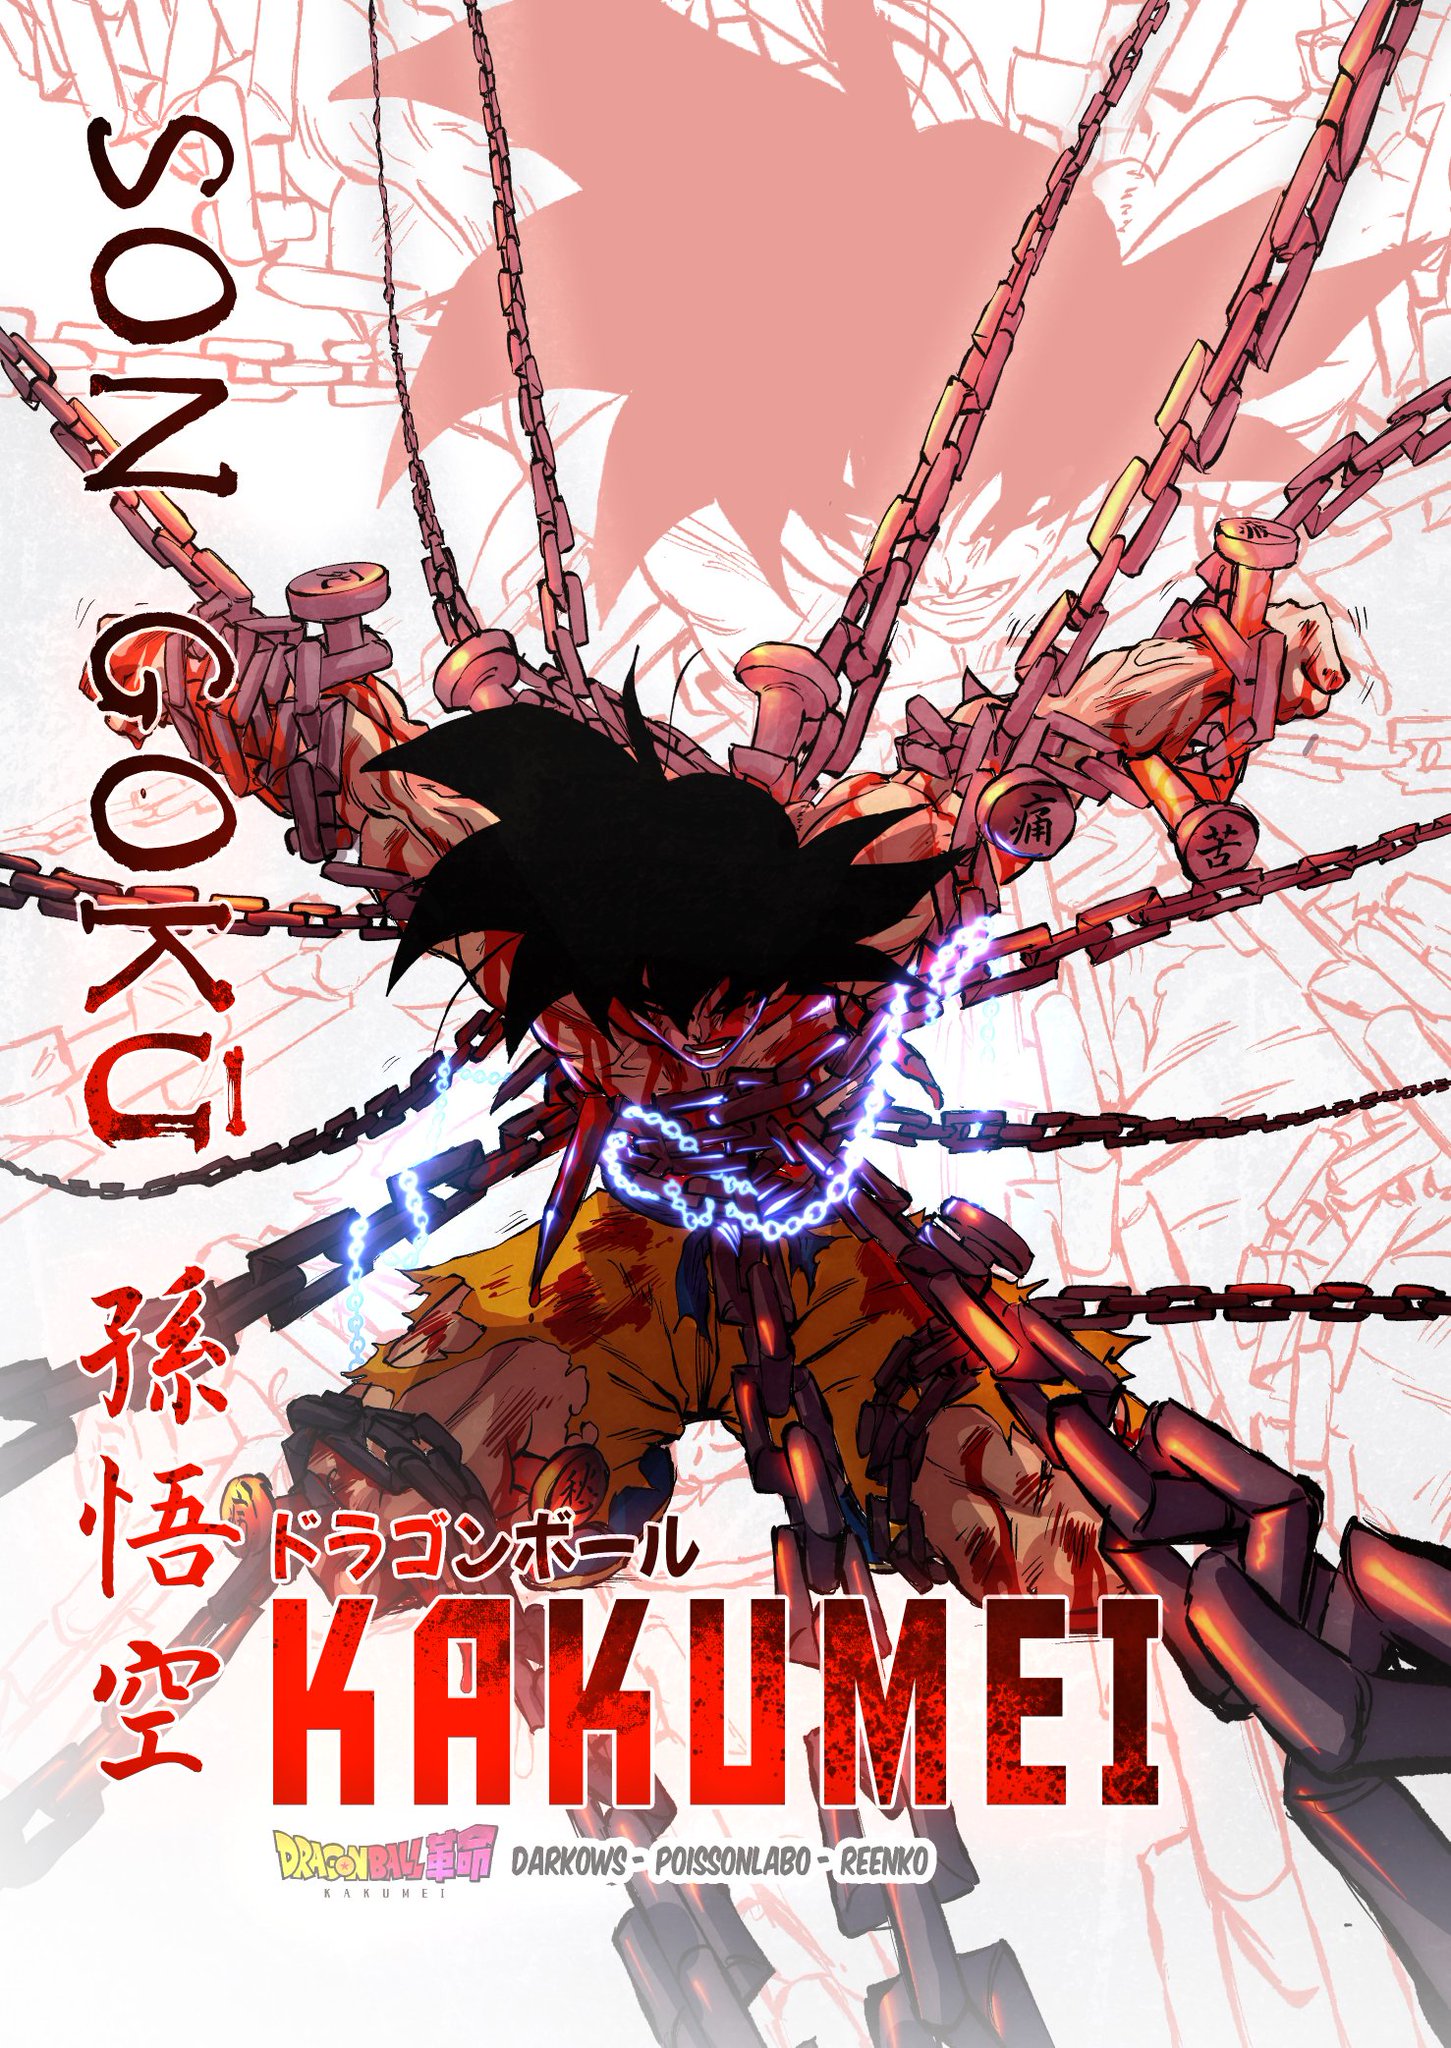 Will there be a Dragon Ball Kakumei anime adaptation